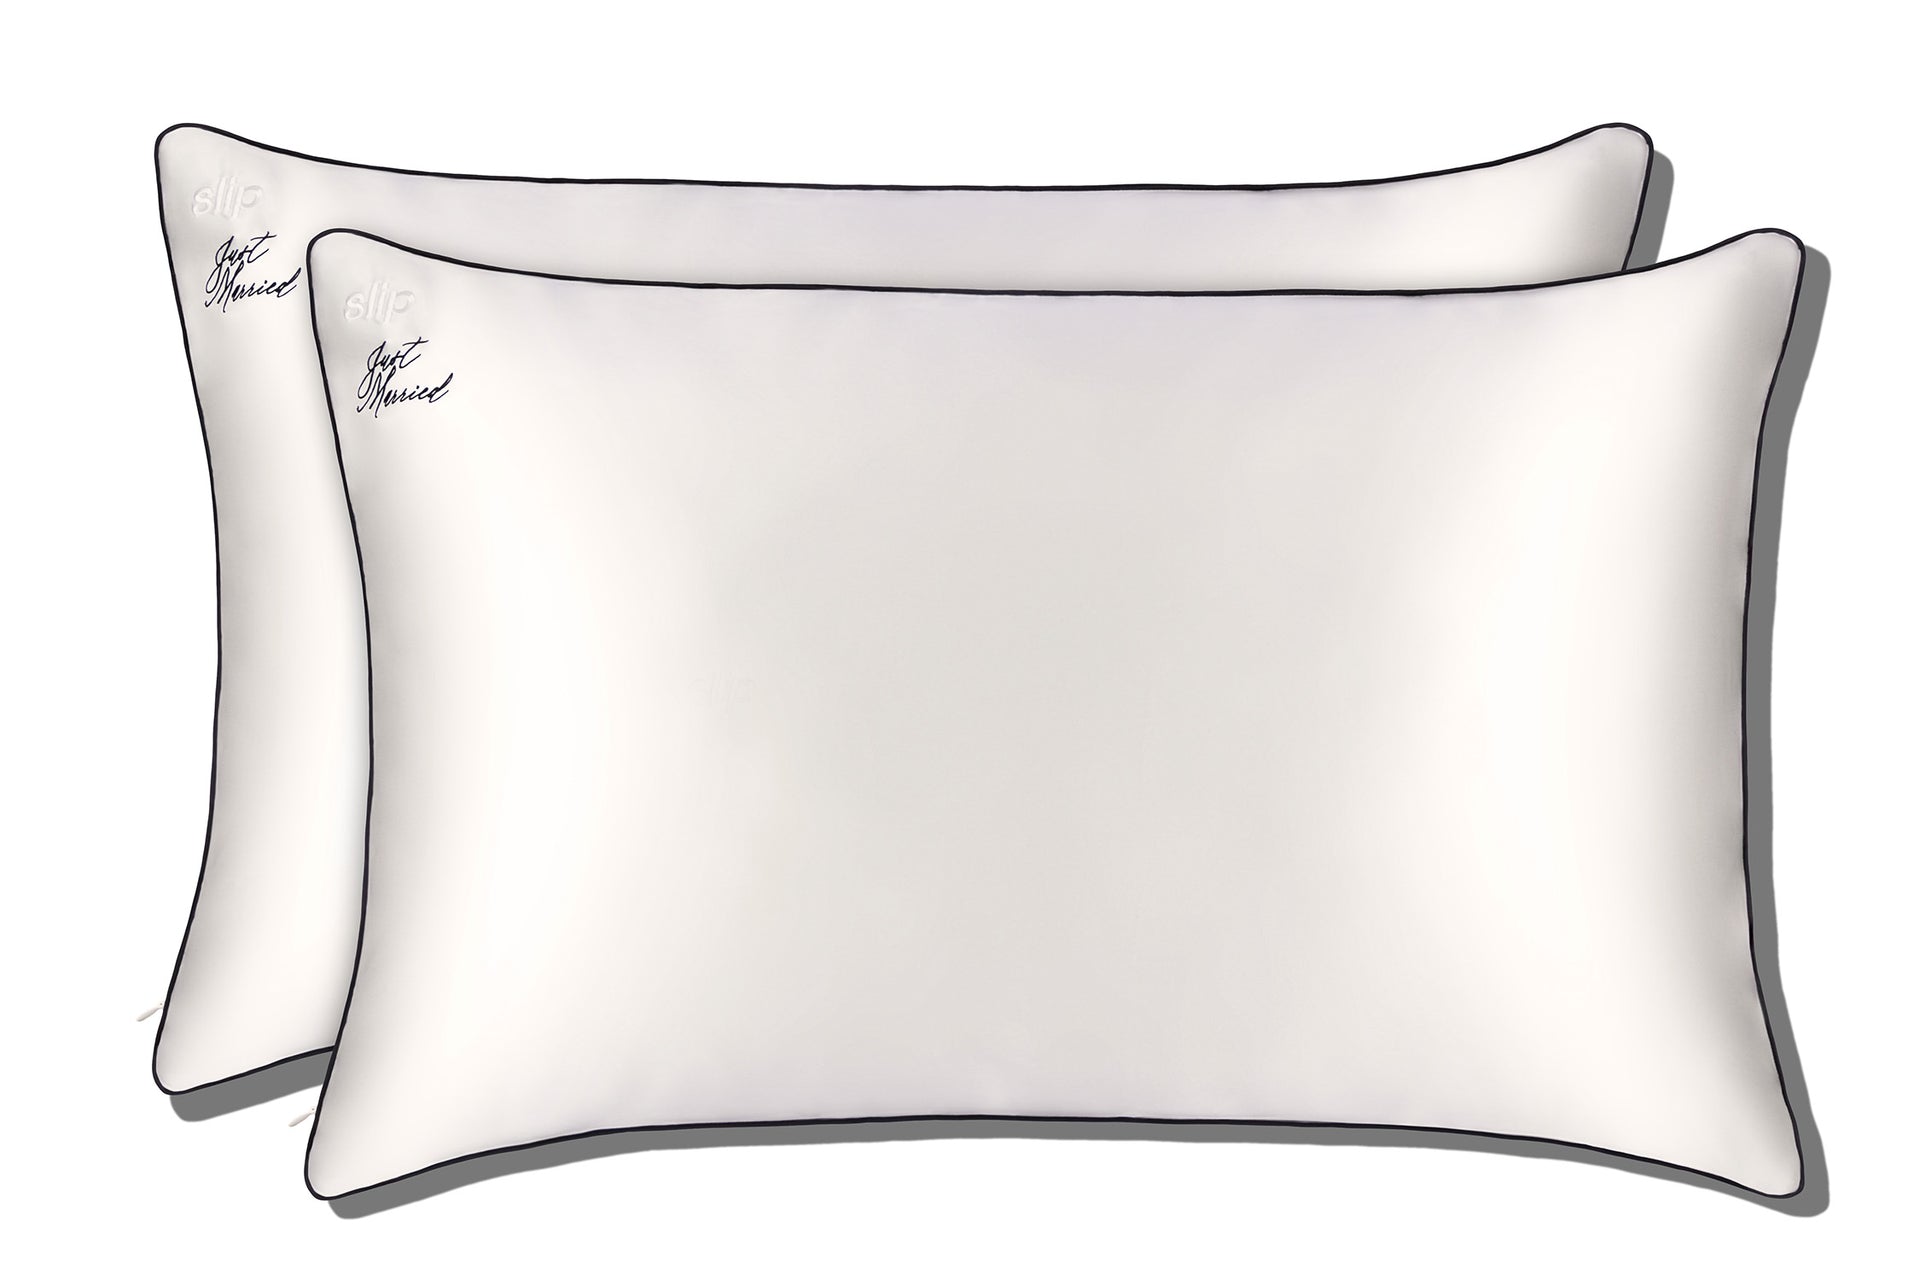 Tufted Embellished Sunrise Lumbar Pillow by World Market